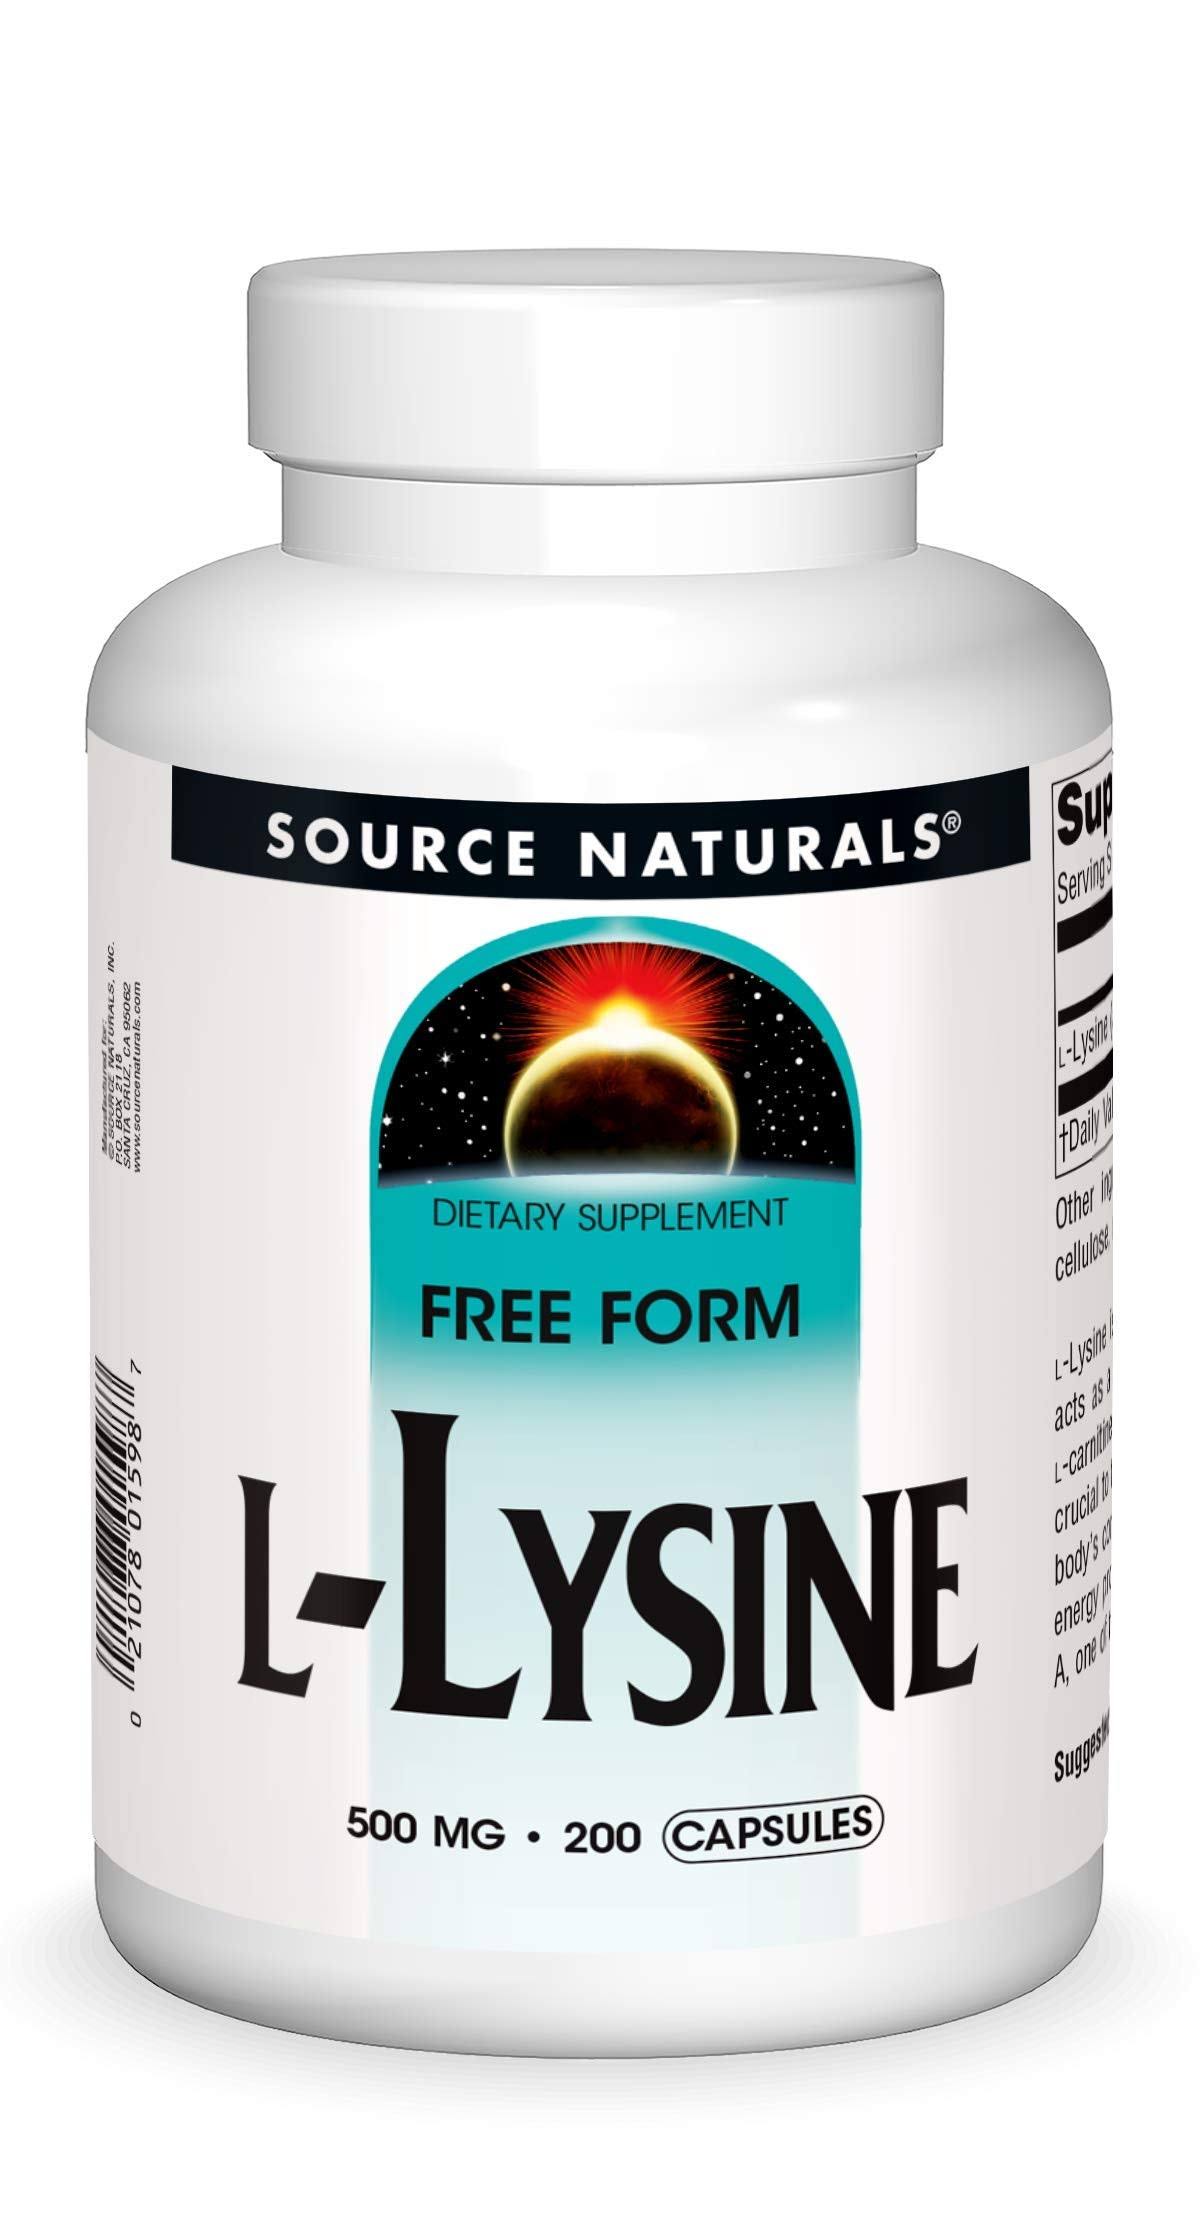 Source Naturals L-Lysine Free Form Supplement - 500mg, 200ct